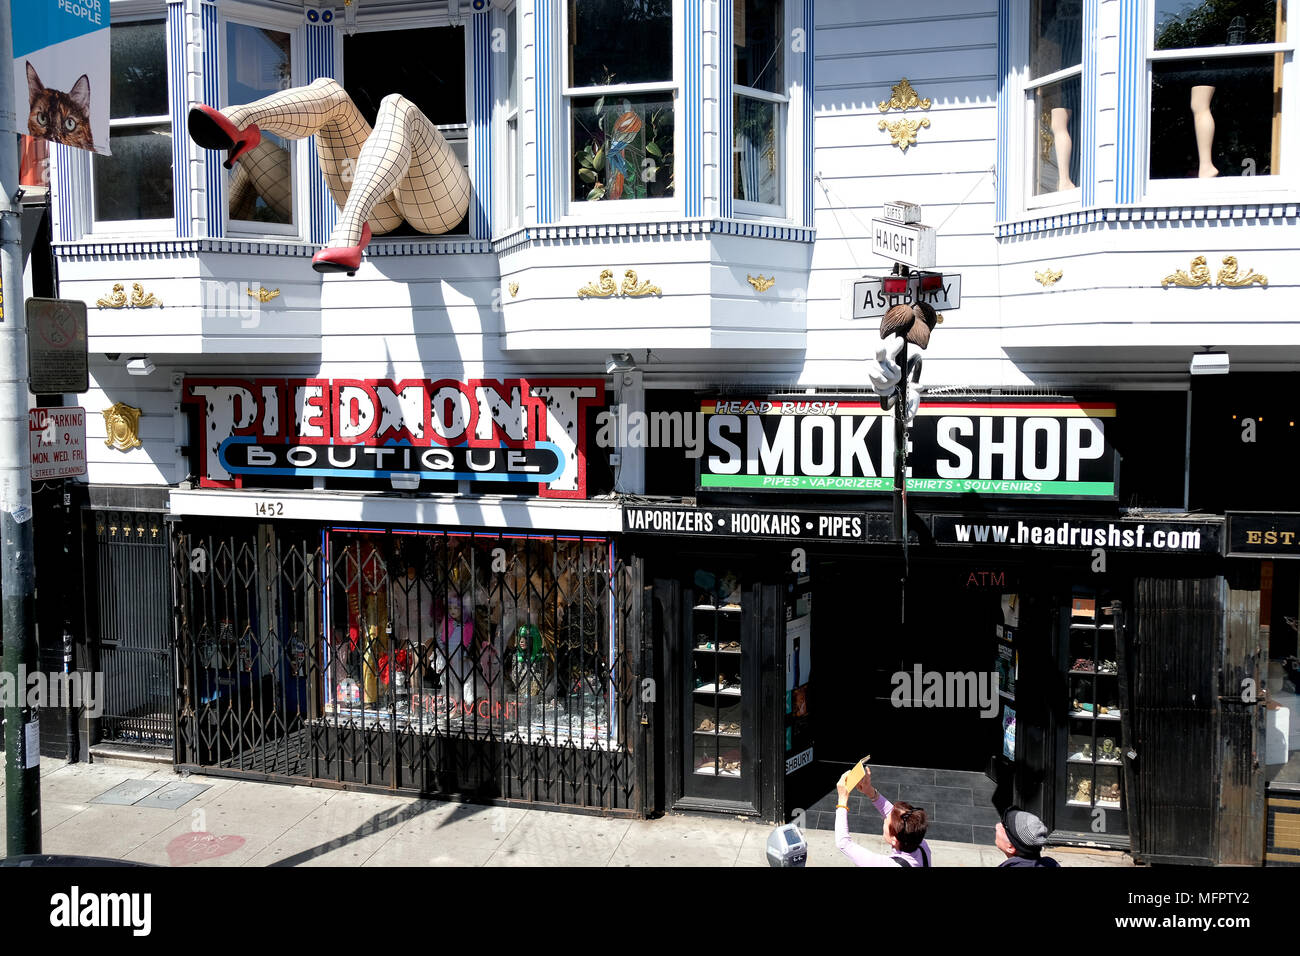 San Francisco sights and scenes Stock Photo